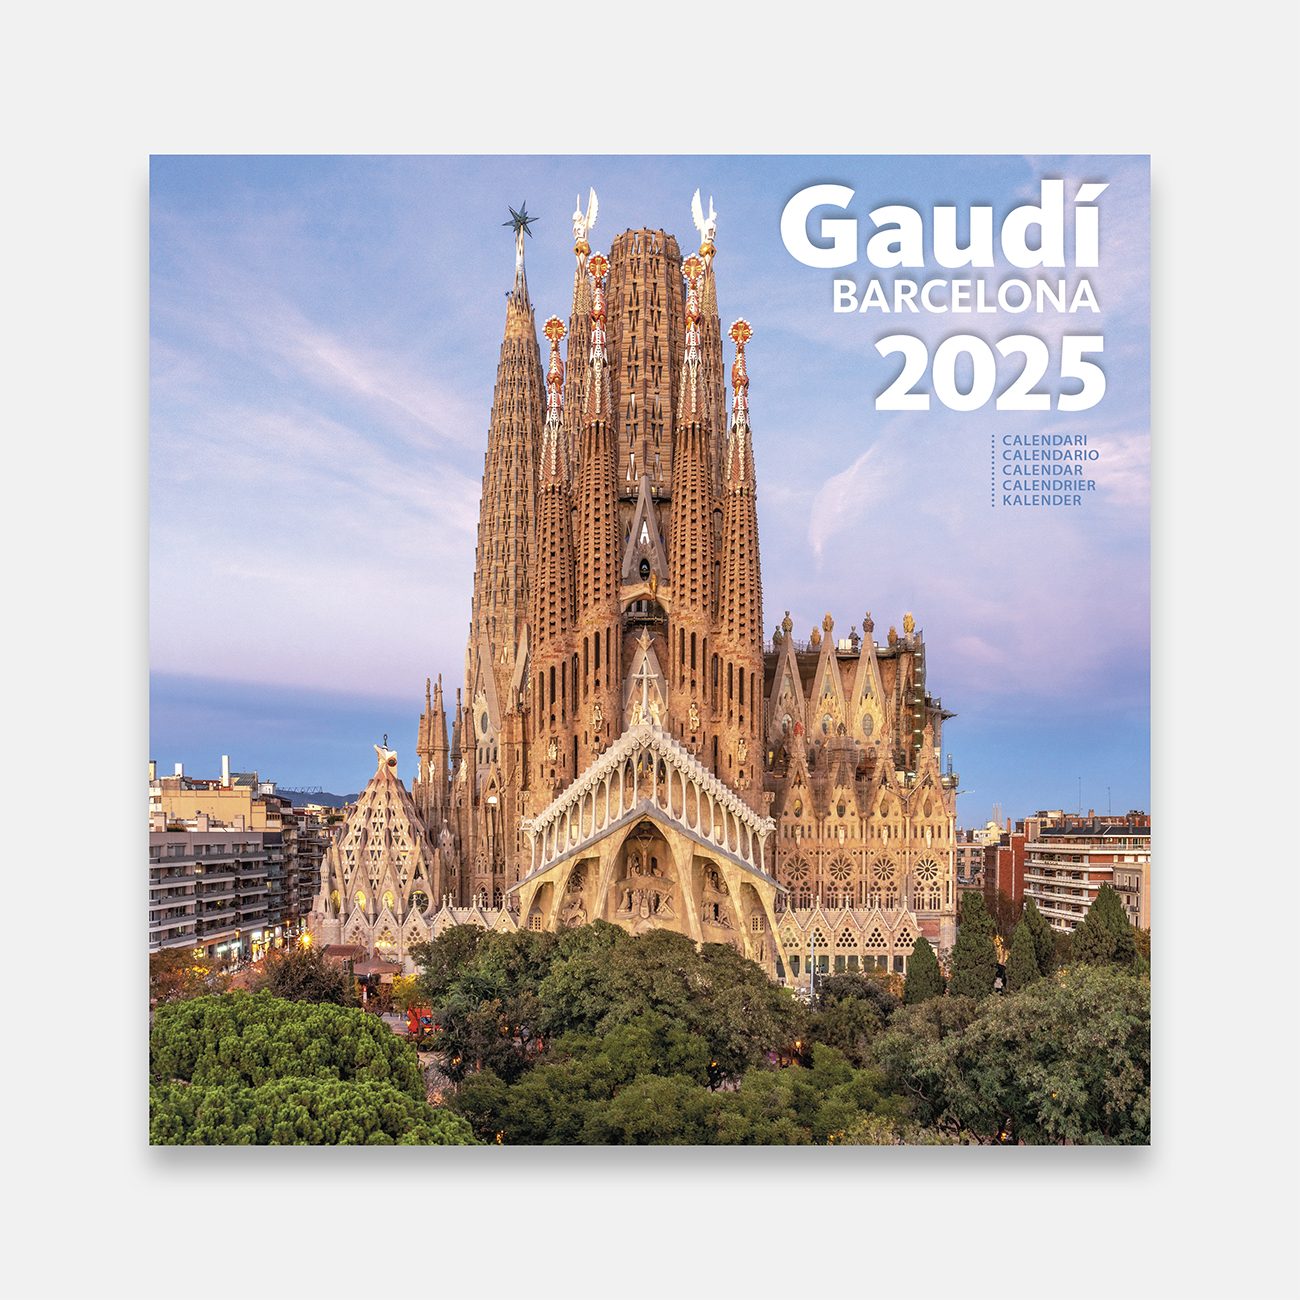 Calendrier 2025 Gaudí (Sagrada Família) 25g1 b calendario pared 2025 gaudi sagrada familia